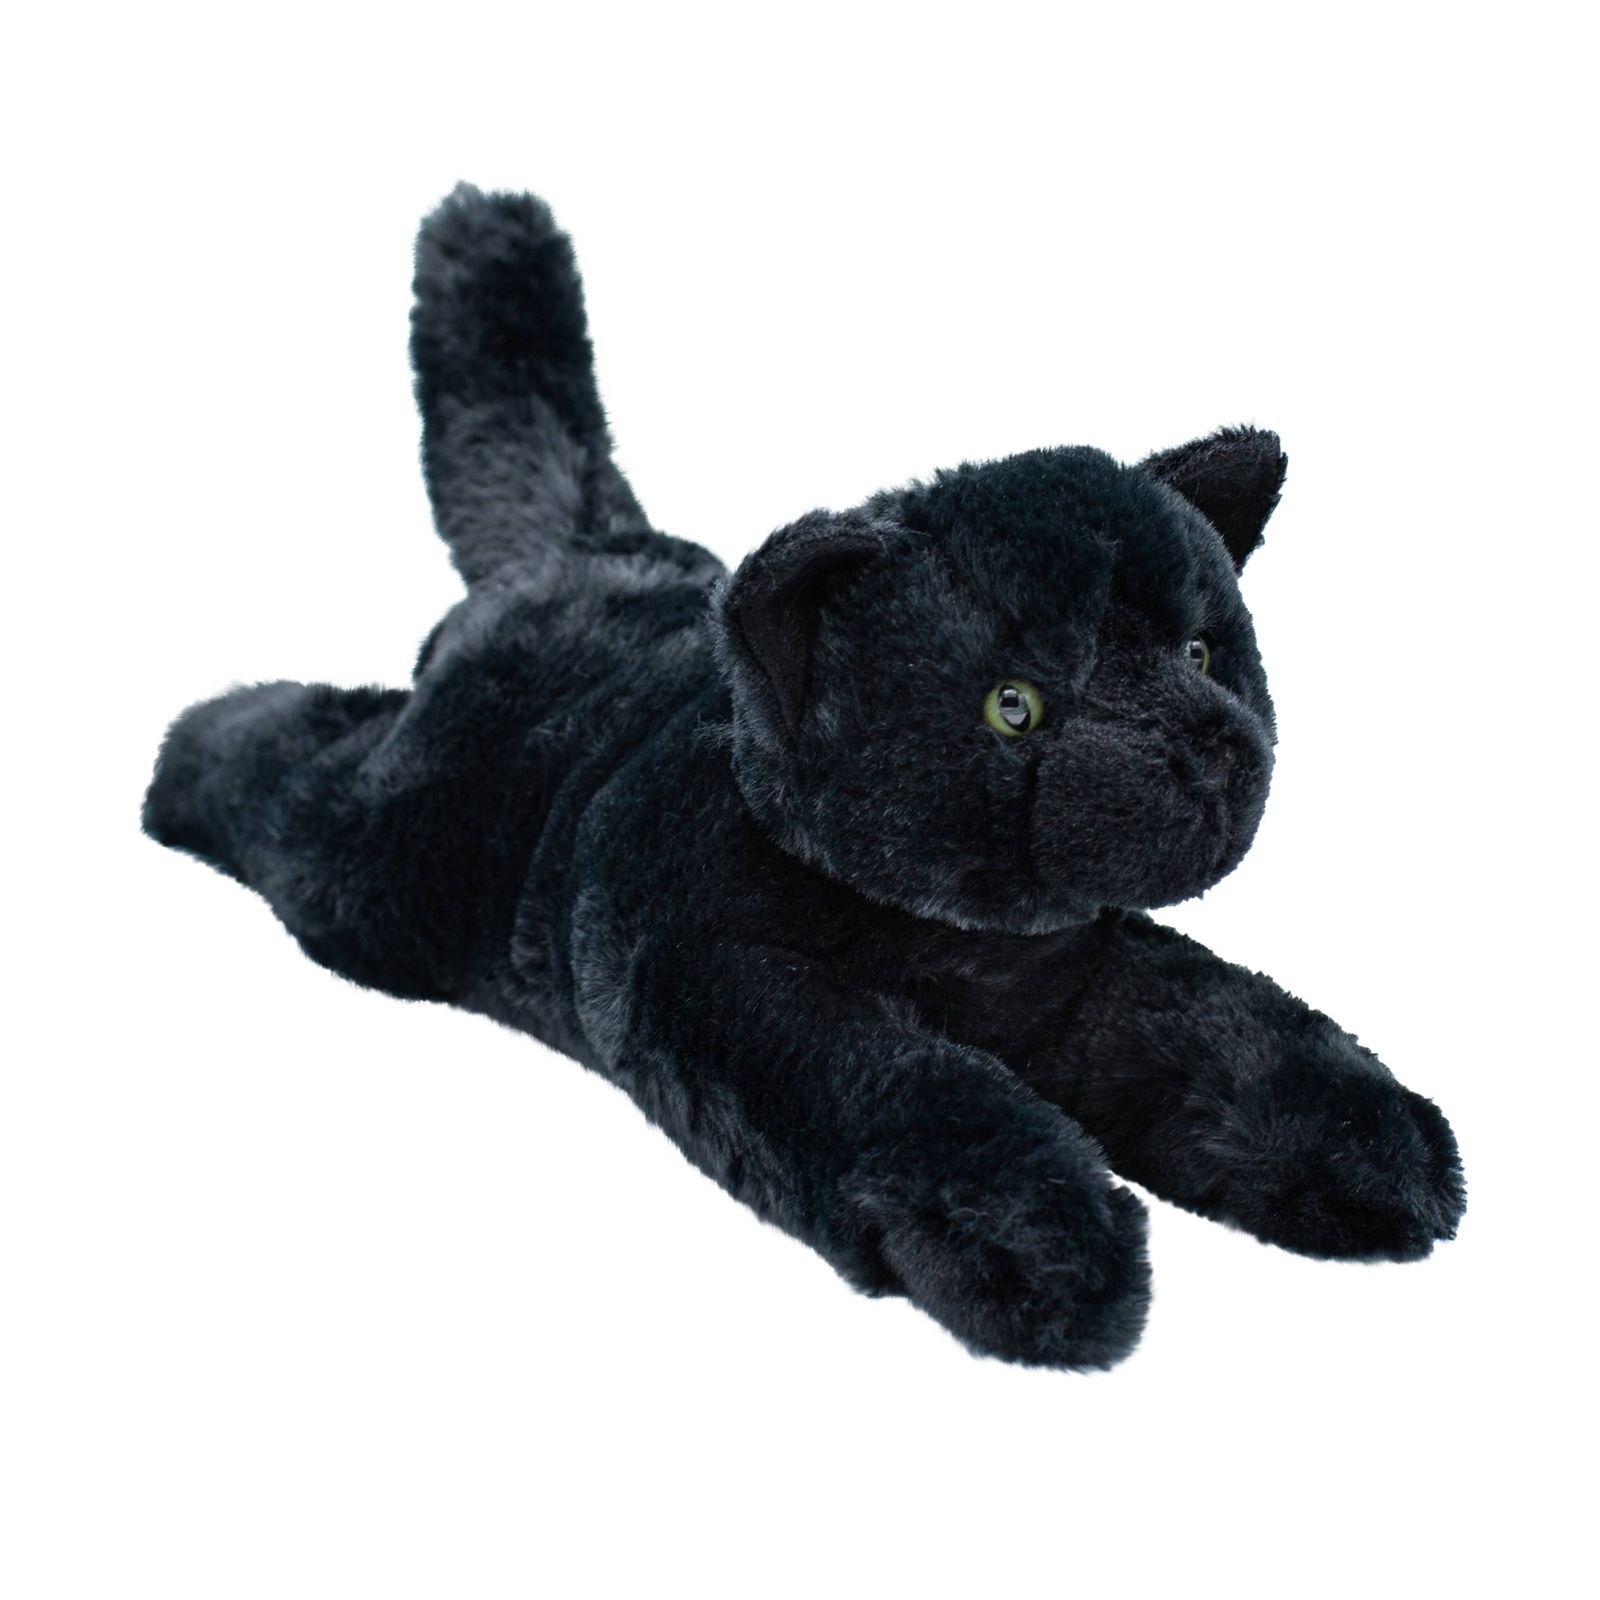 black cat with green eyes stuffed animal